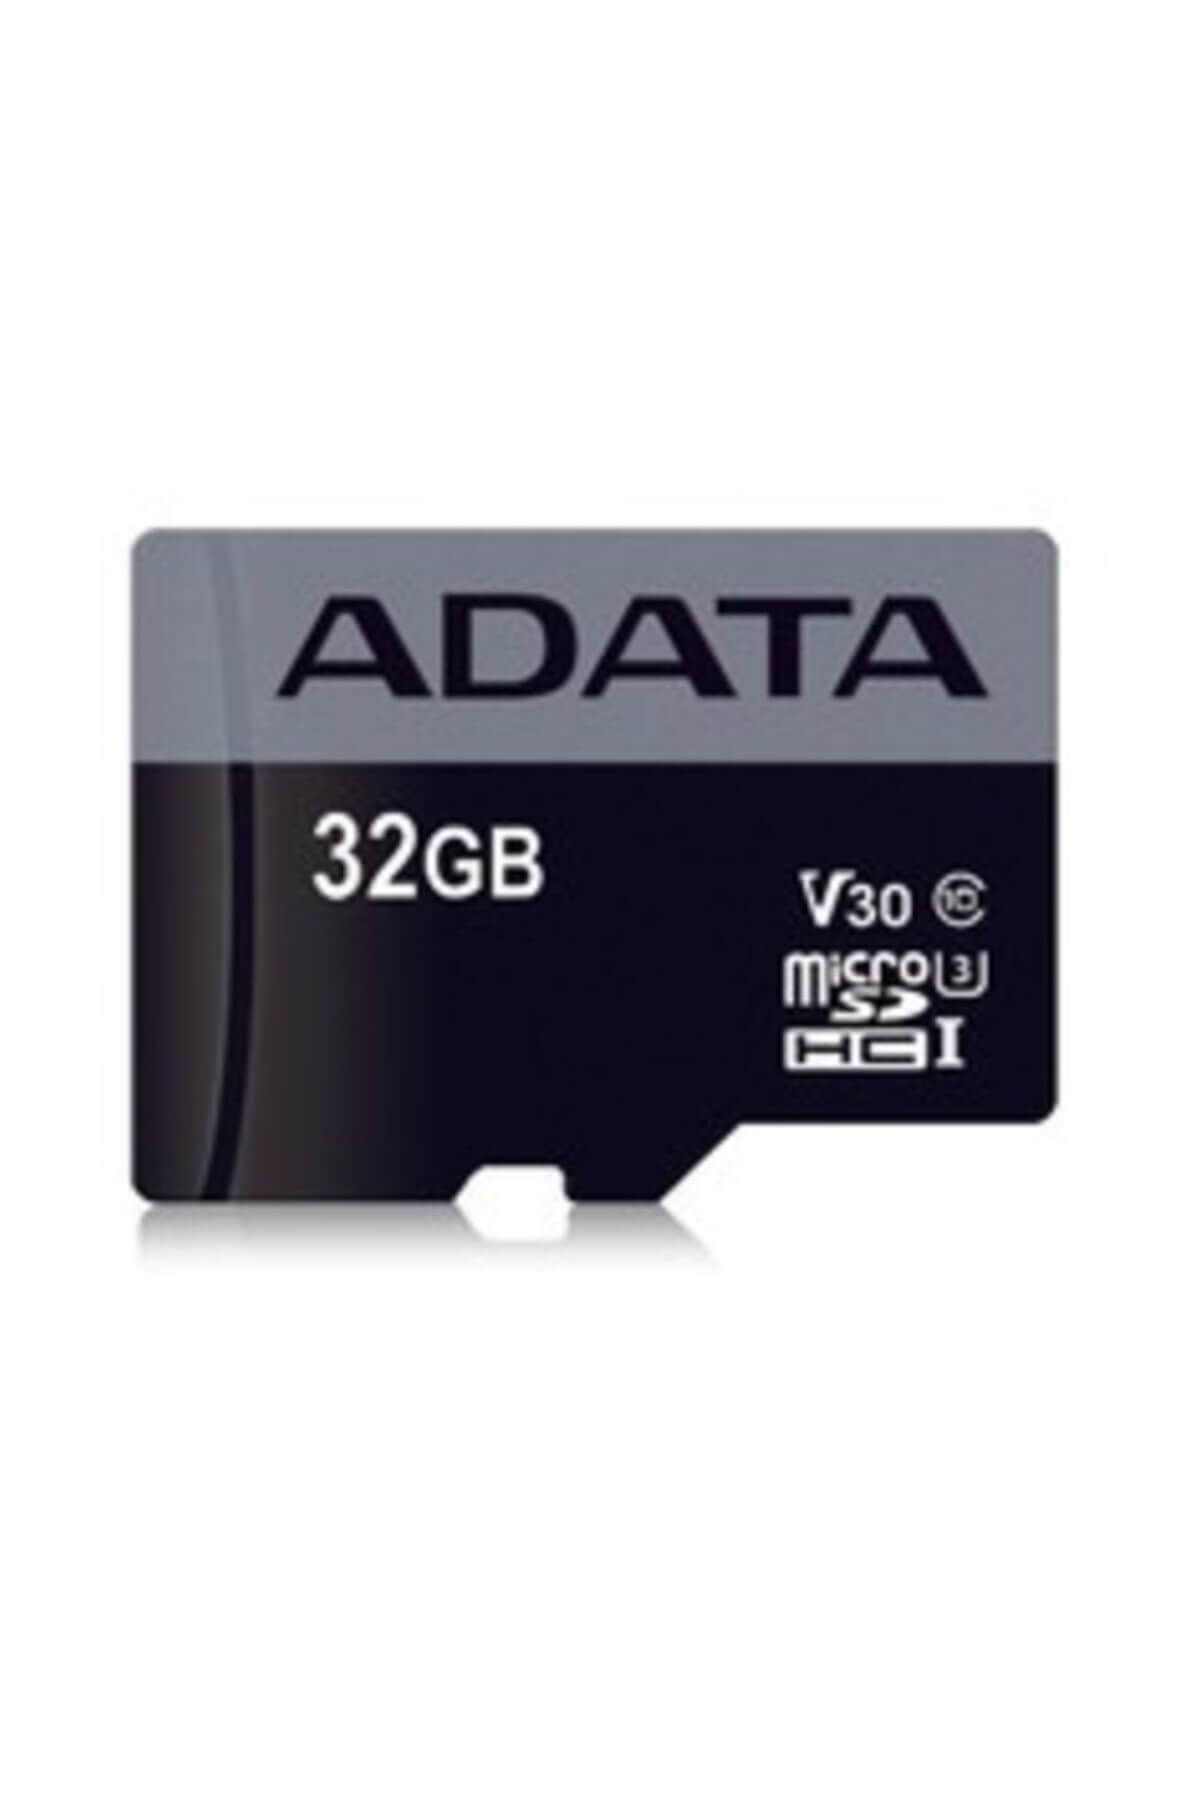 Adata Micro SD Ultra High Speed-I Class10 32GB 50MB/s